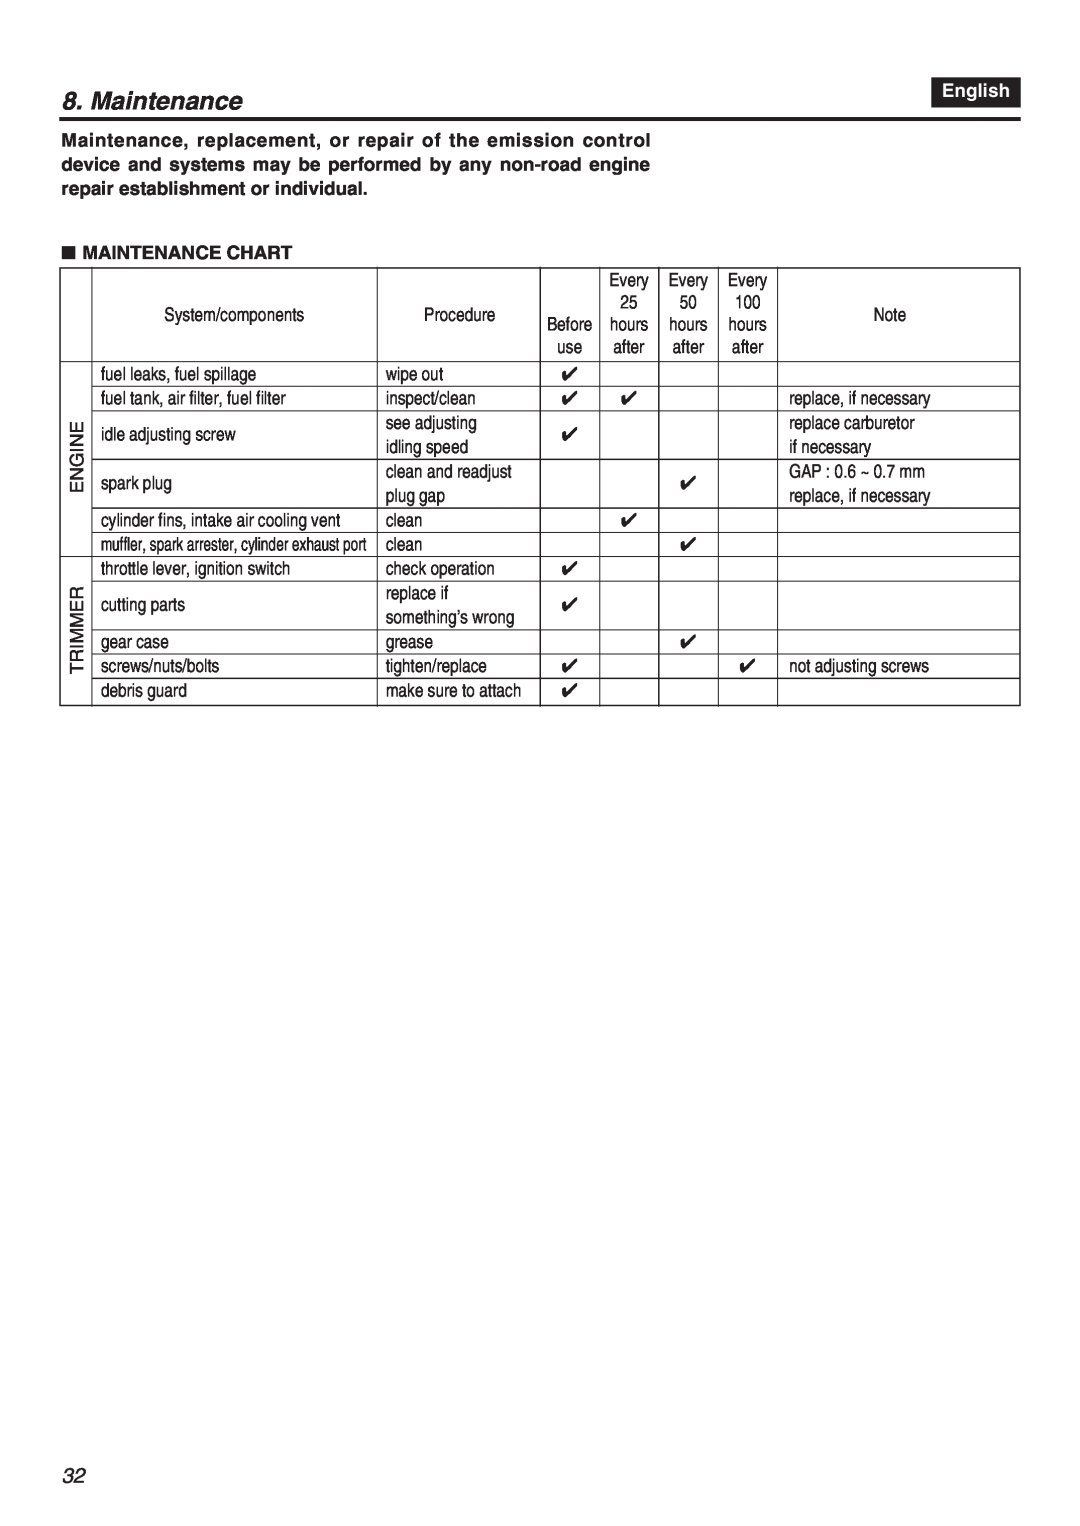 RedMax CHTZ2401-CA, CHTZ2401L-CA manual English, Maintenance Chart 